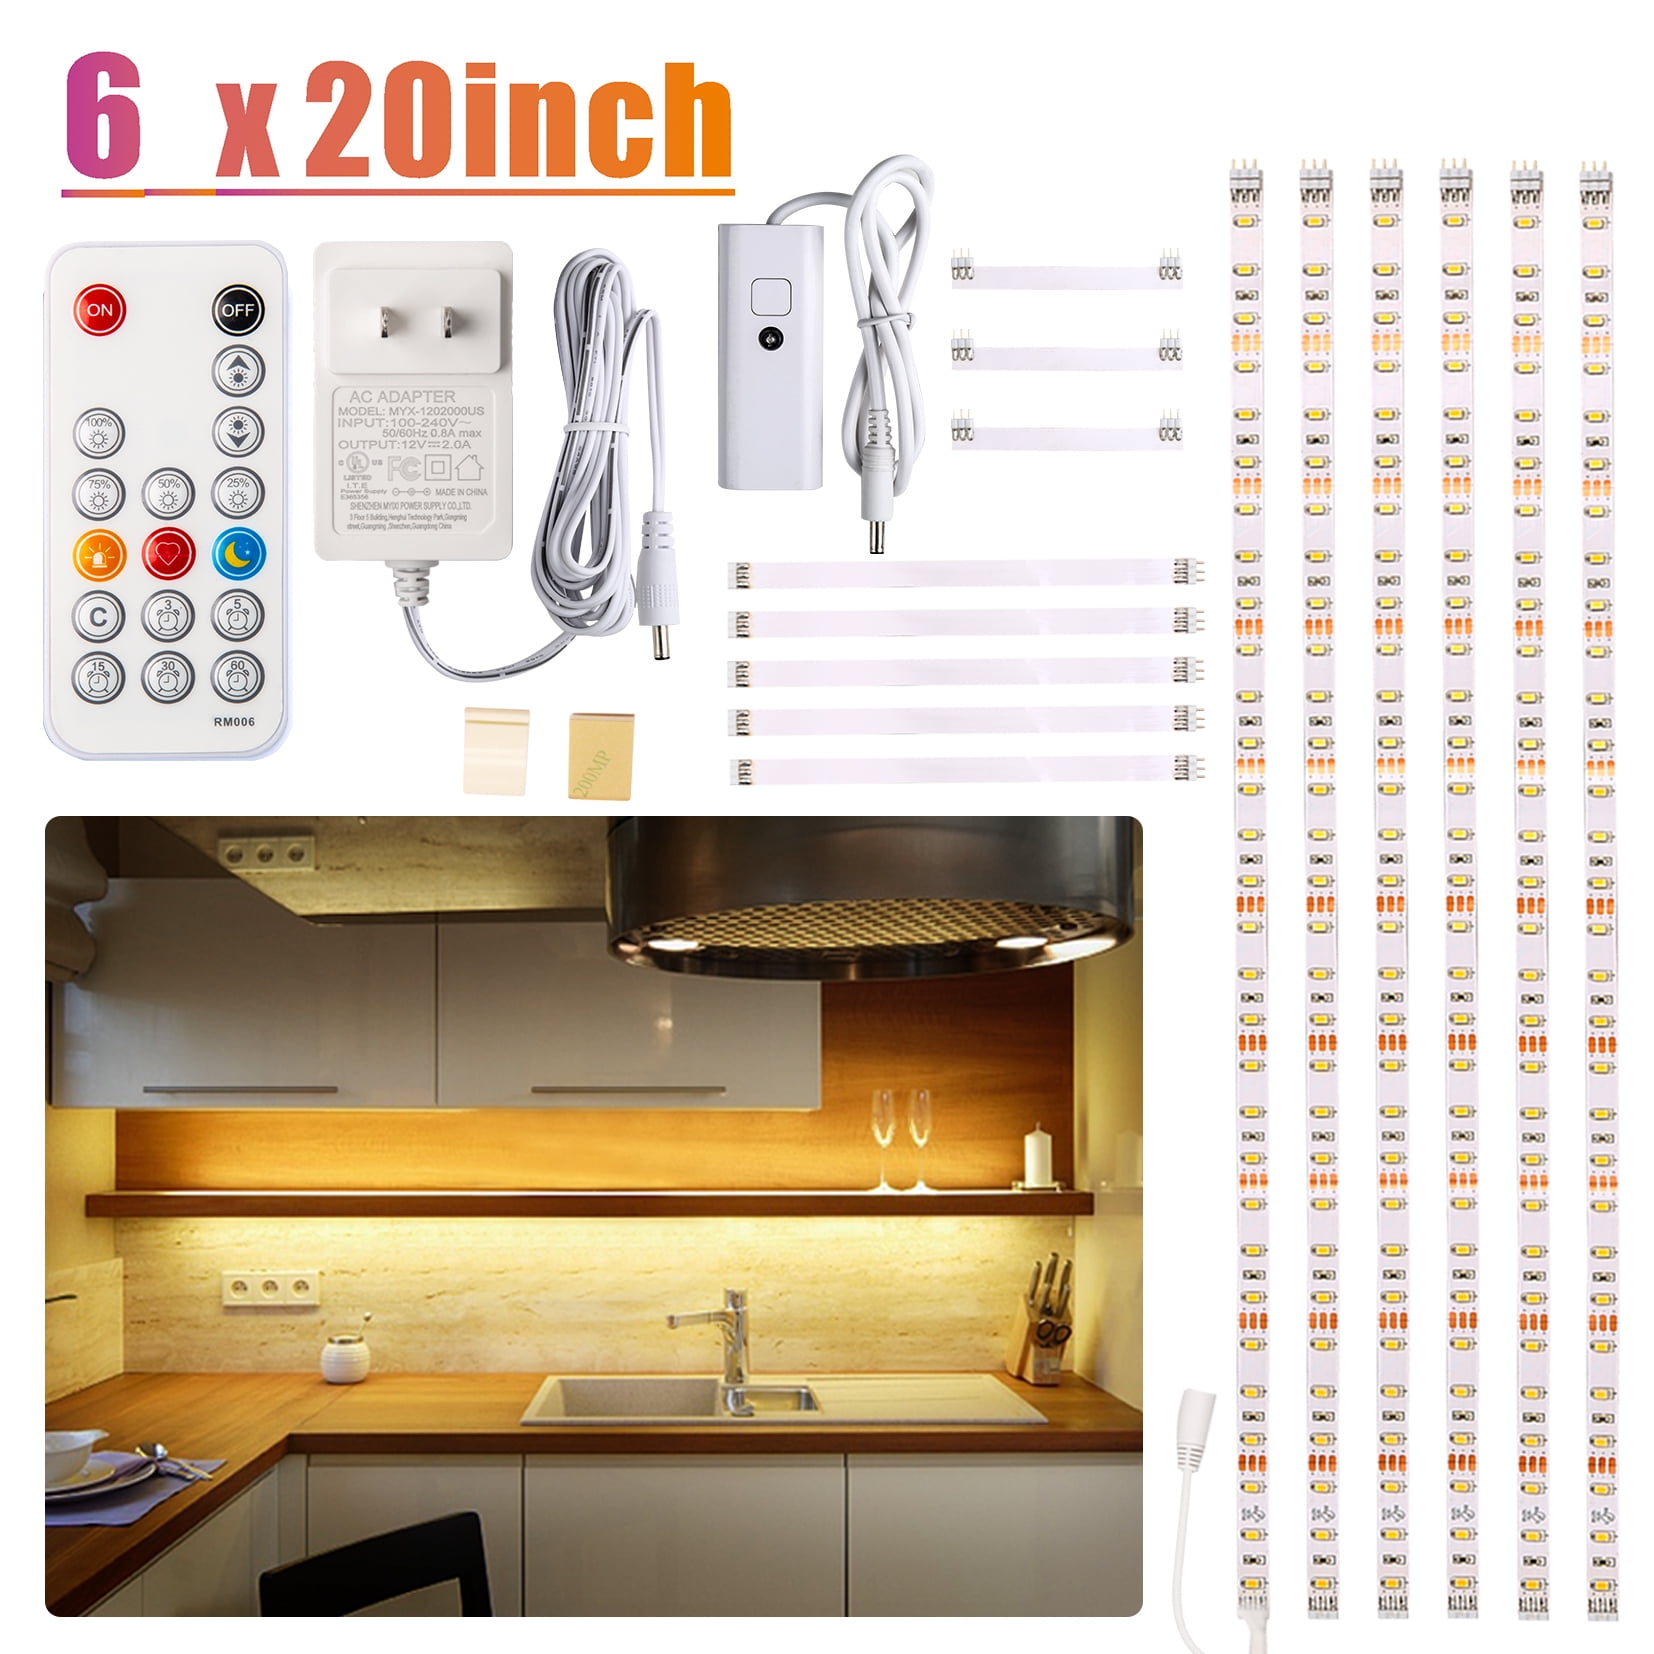 5M 600 LED Strip Light Under Cabinet Lighting Kit Kitchen Shelf Counter Dimmable 